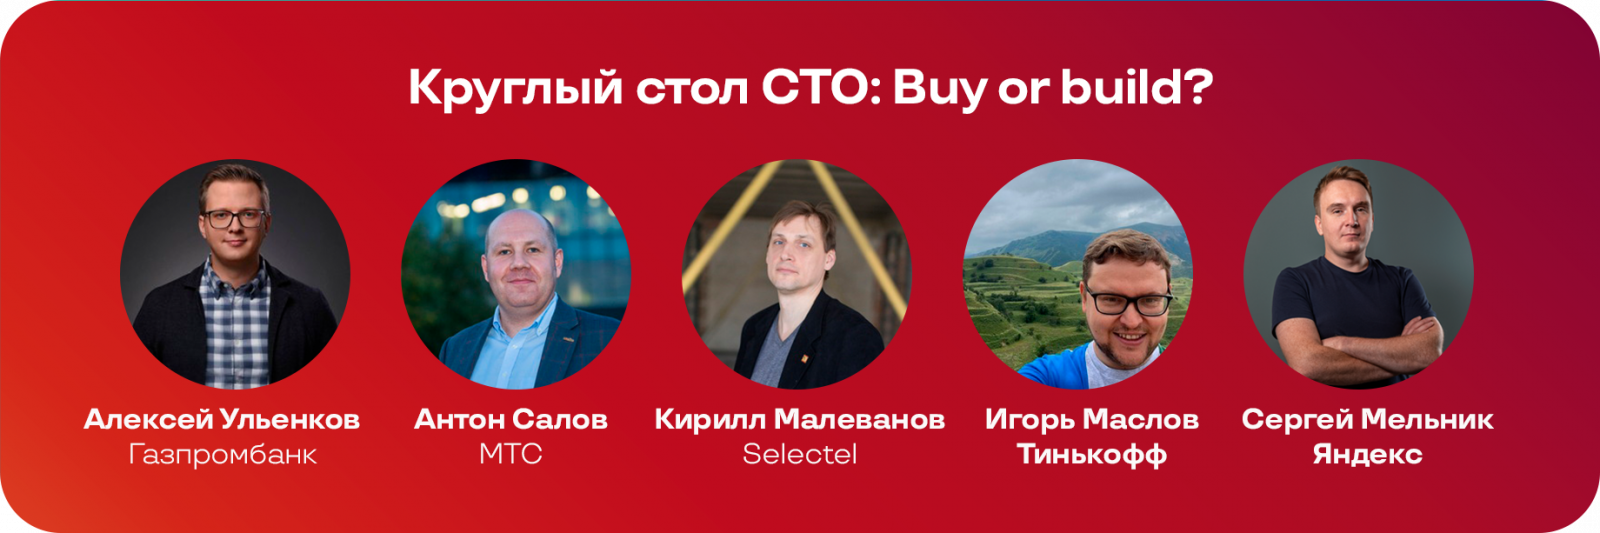 Круглый стол СТО: Buy or build?